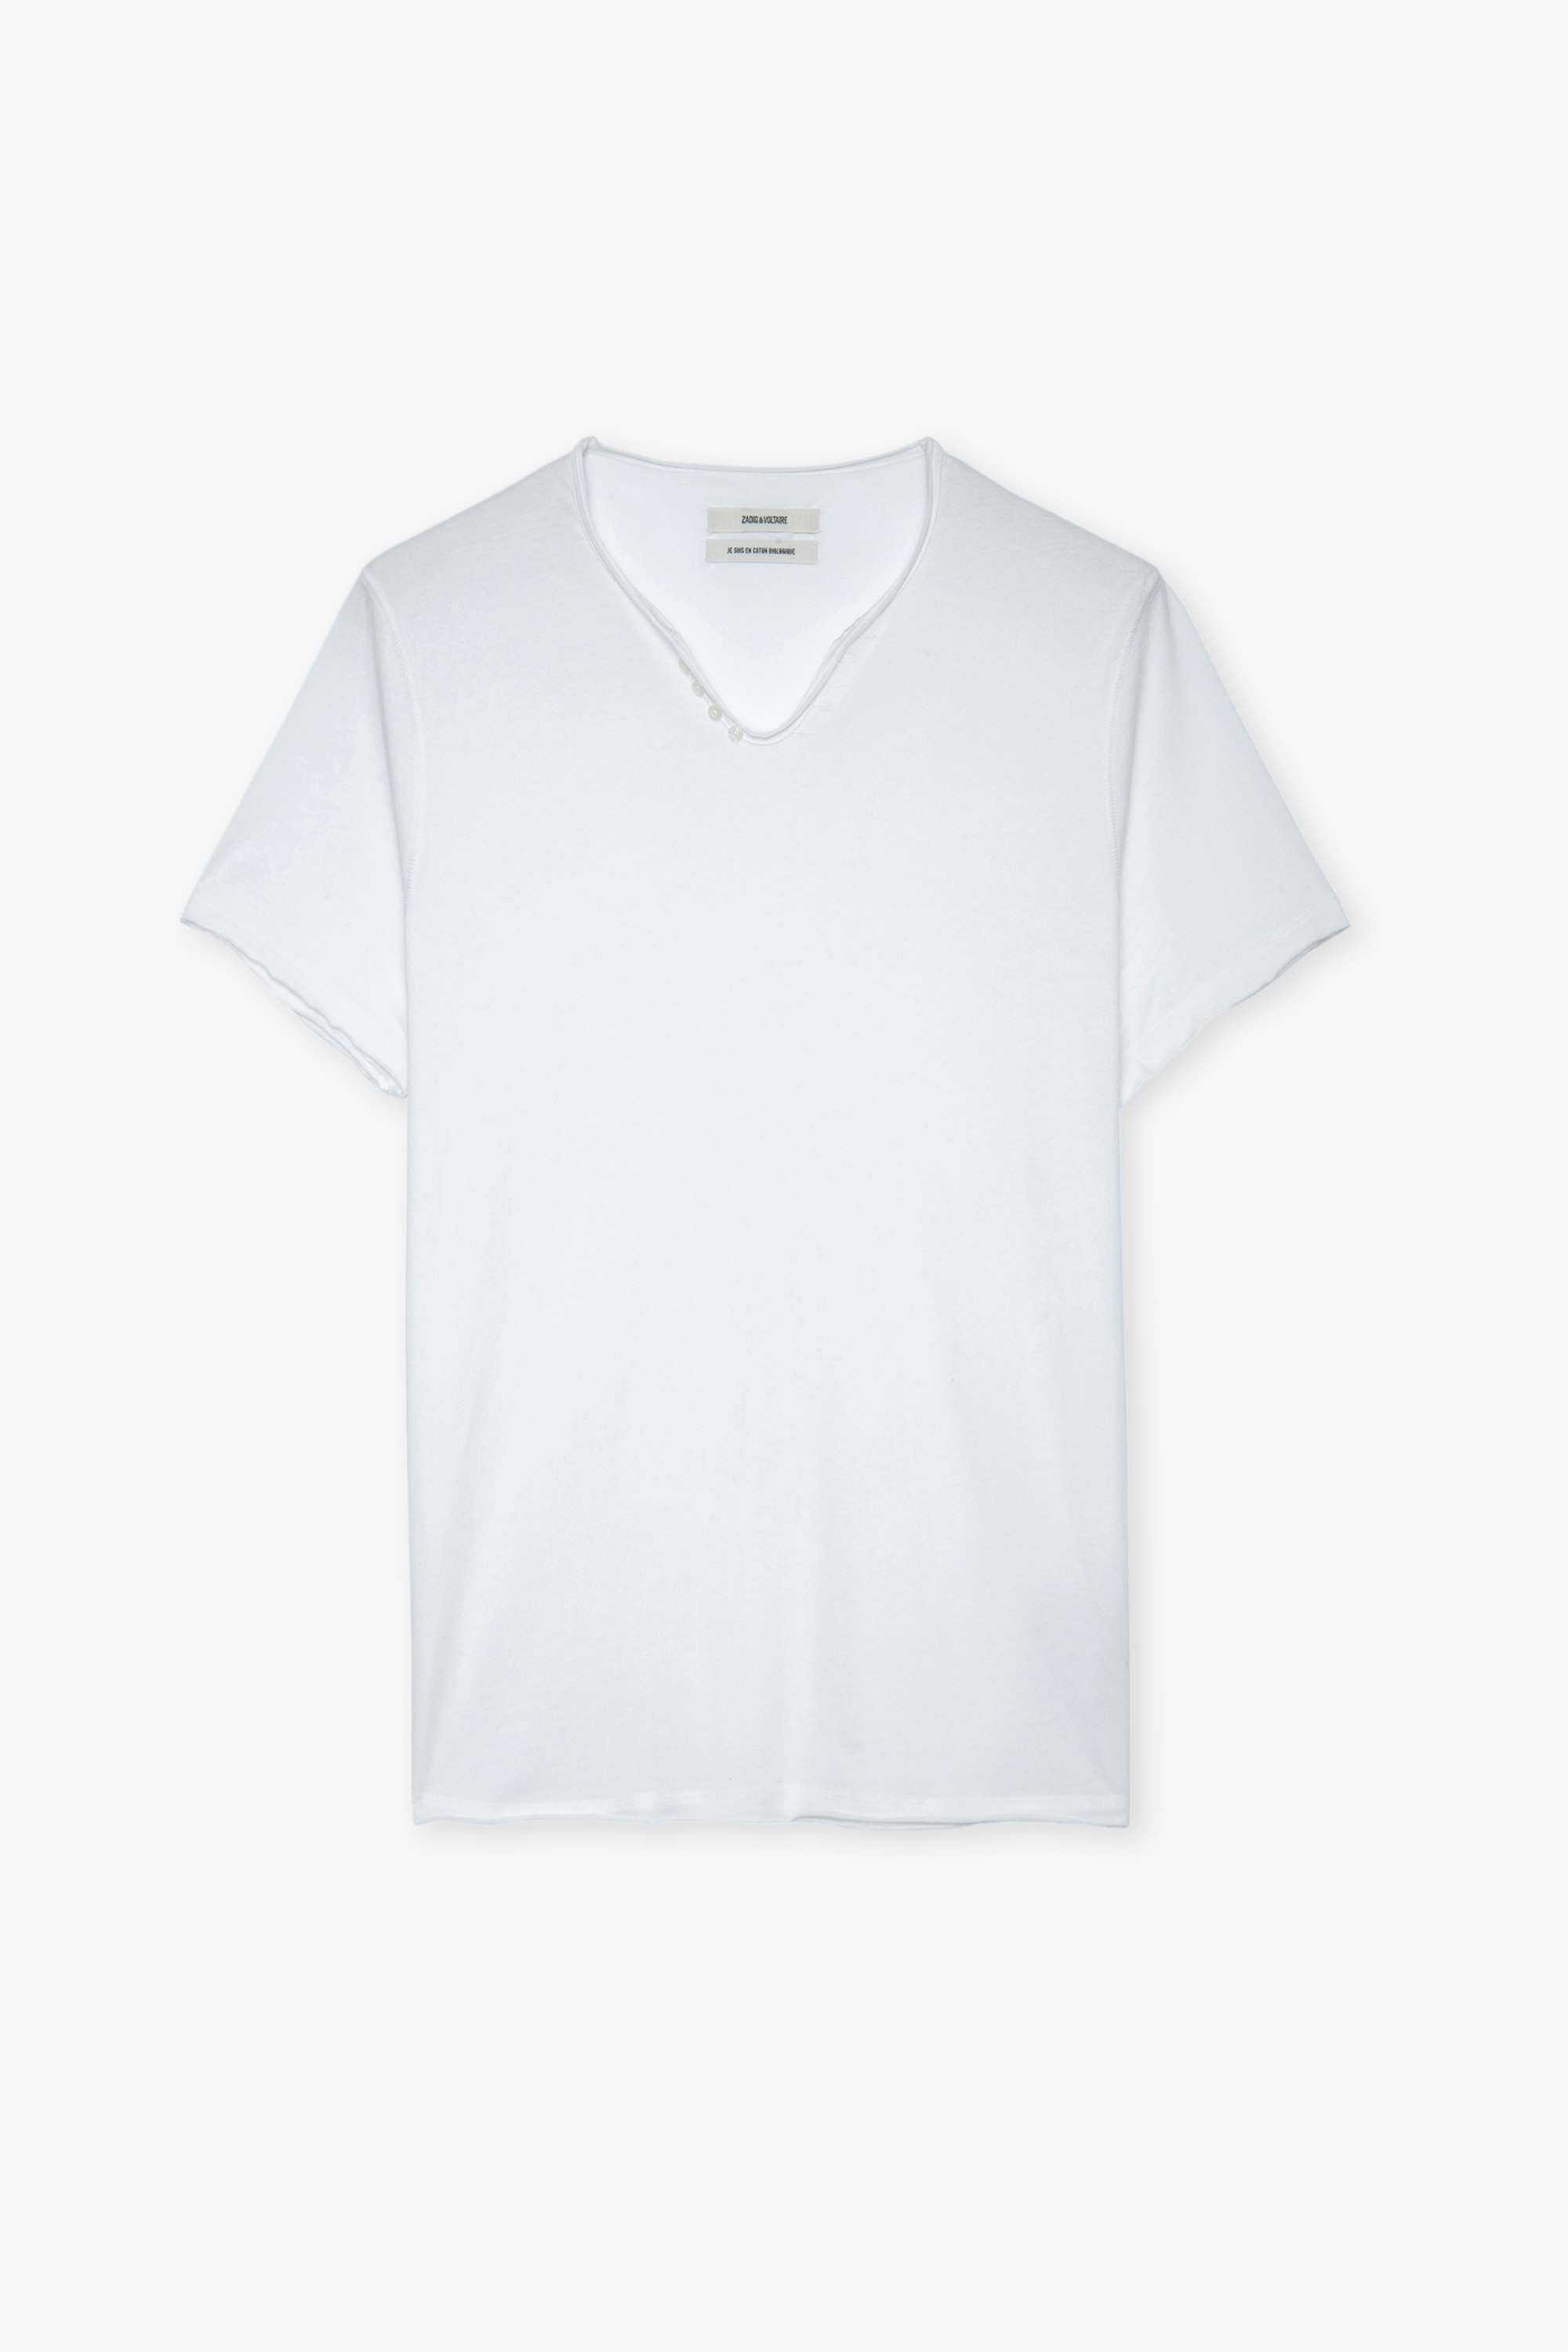 Tunisien Monastir - Camiseta blanca para hombre